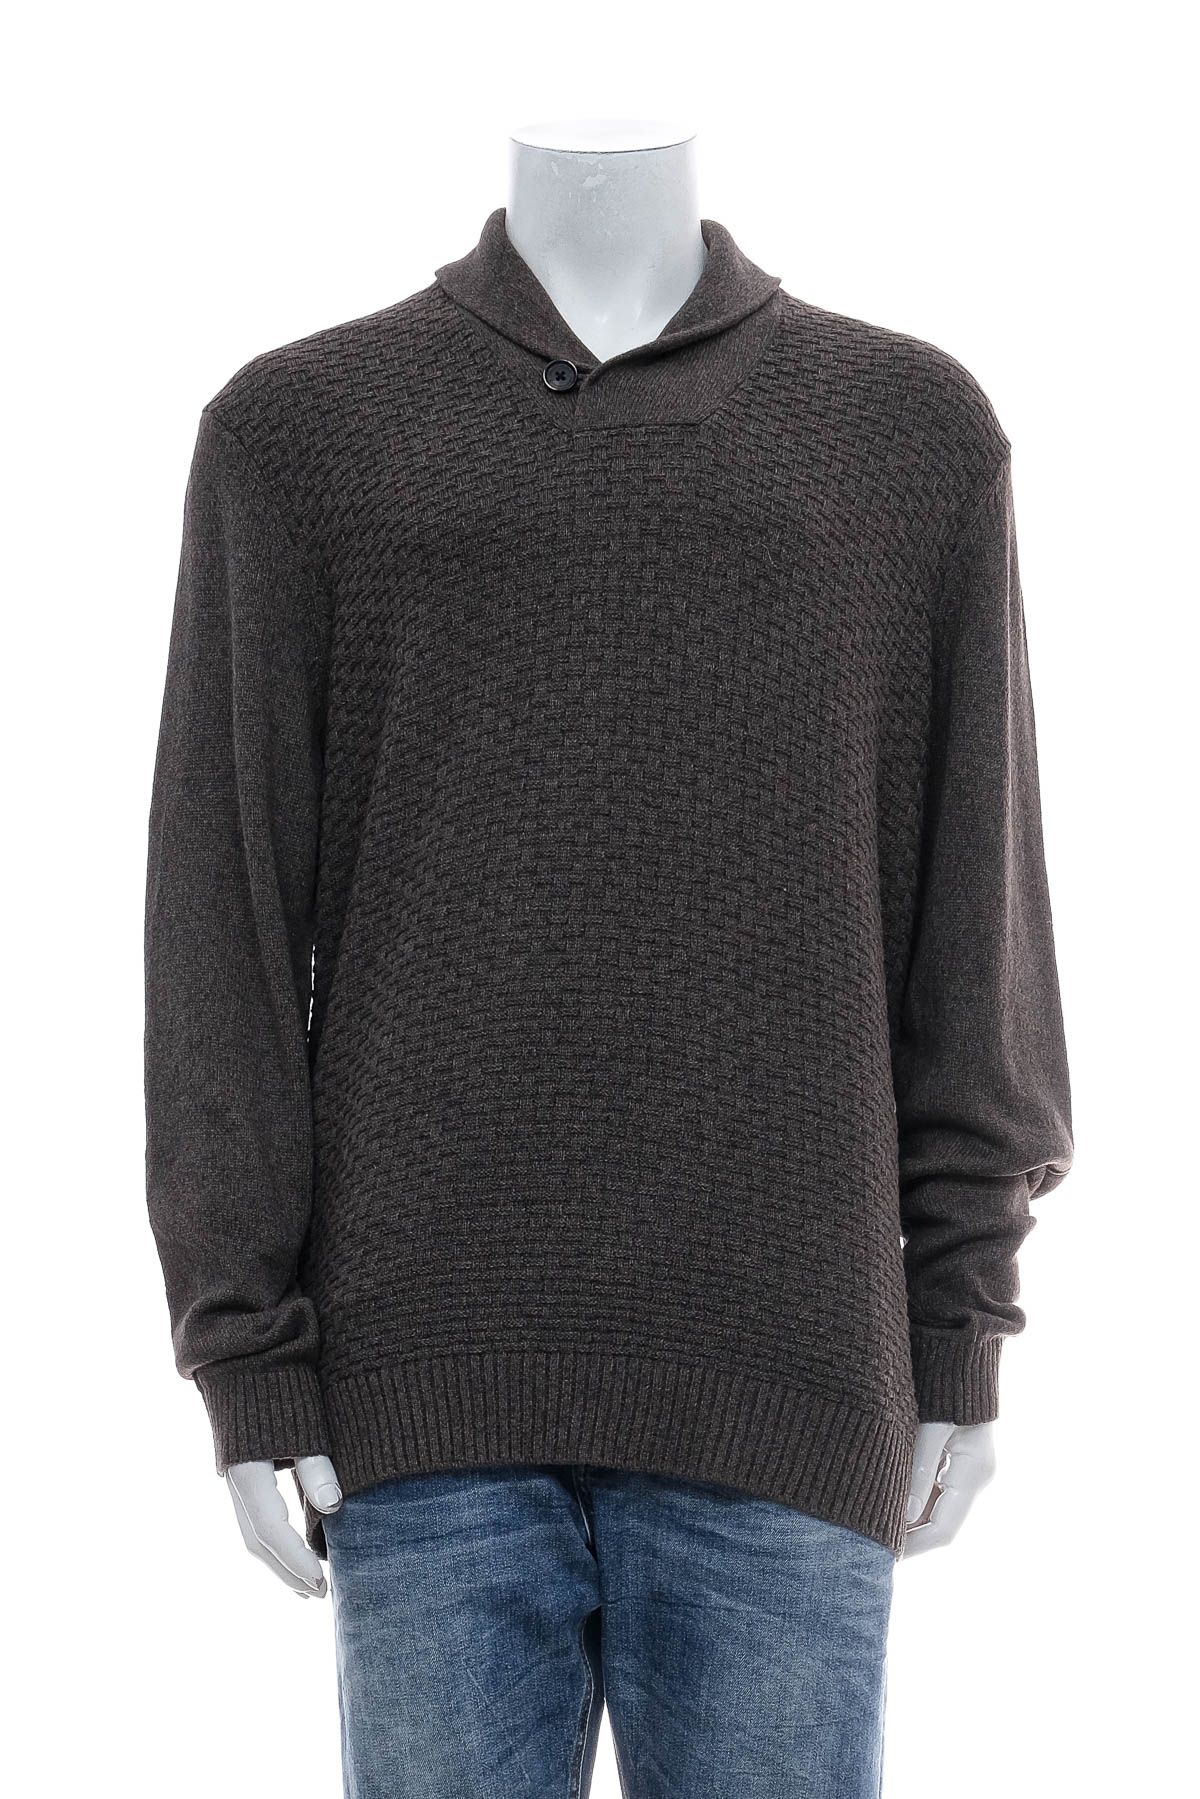 Men's sweater - JOSEPH ABBOUD - 0